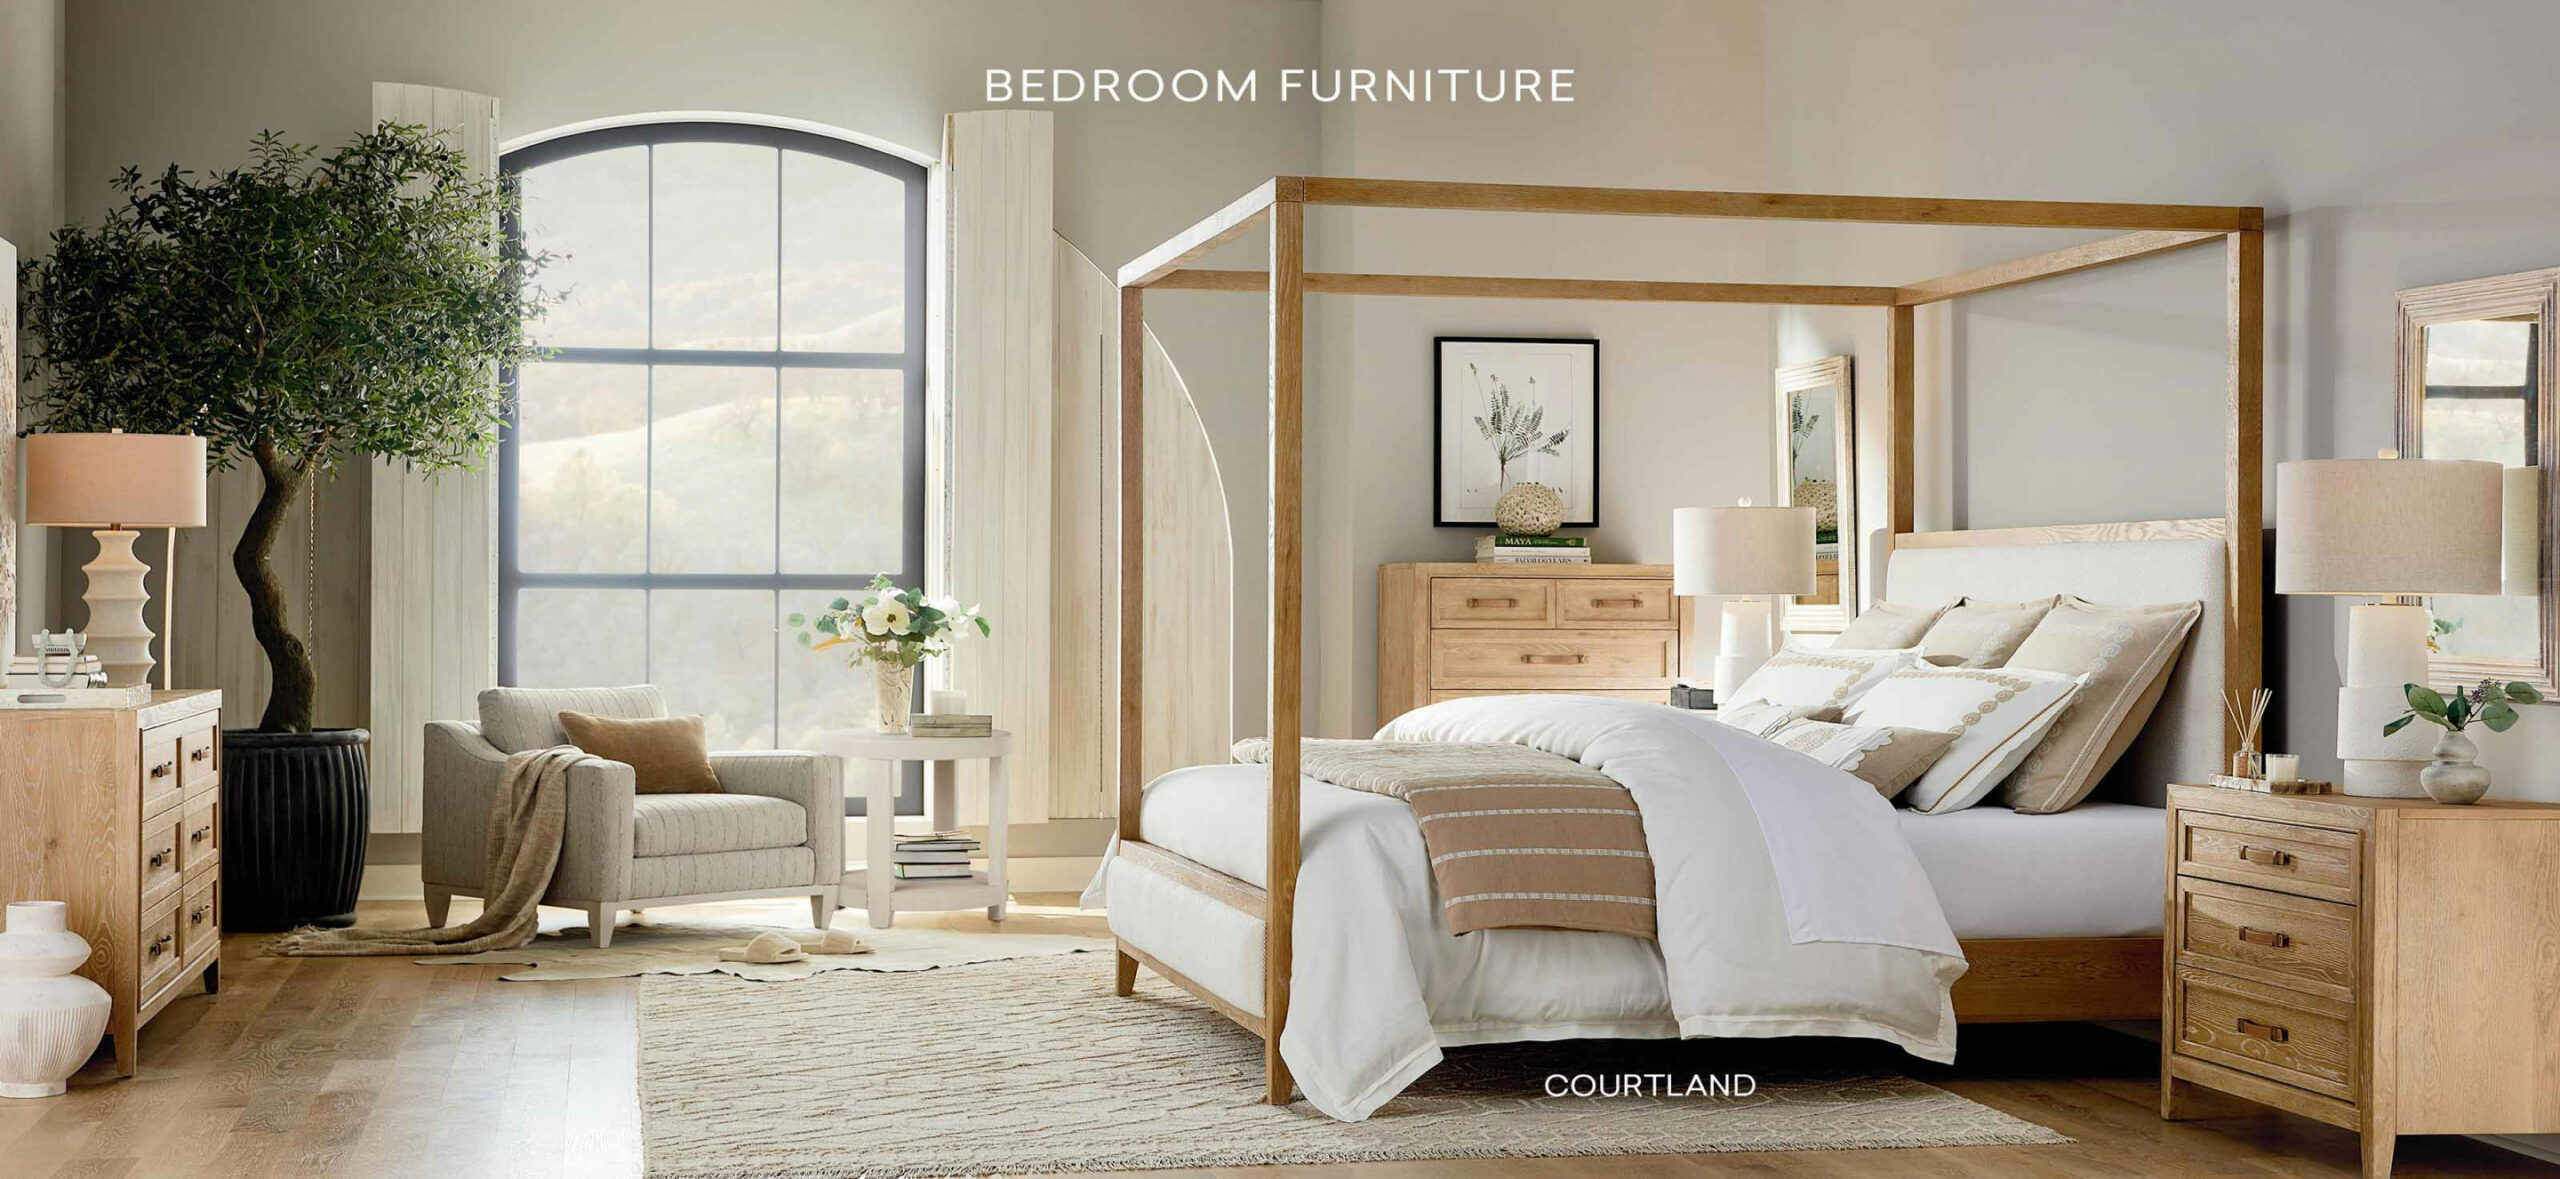 Bedroom Furniture and Suites  Primary Bedroom Sets